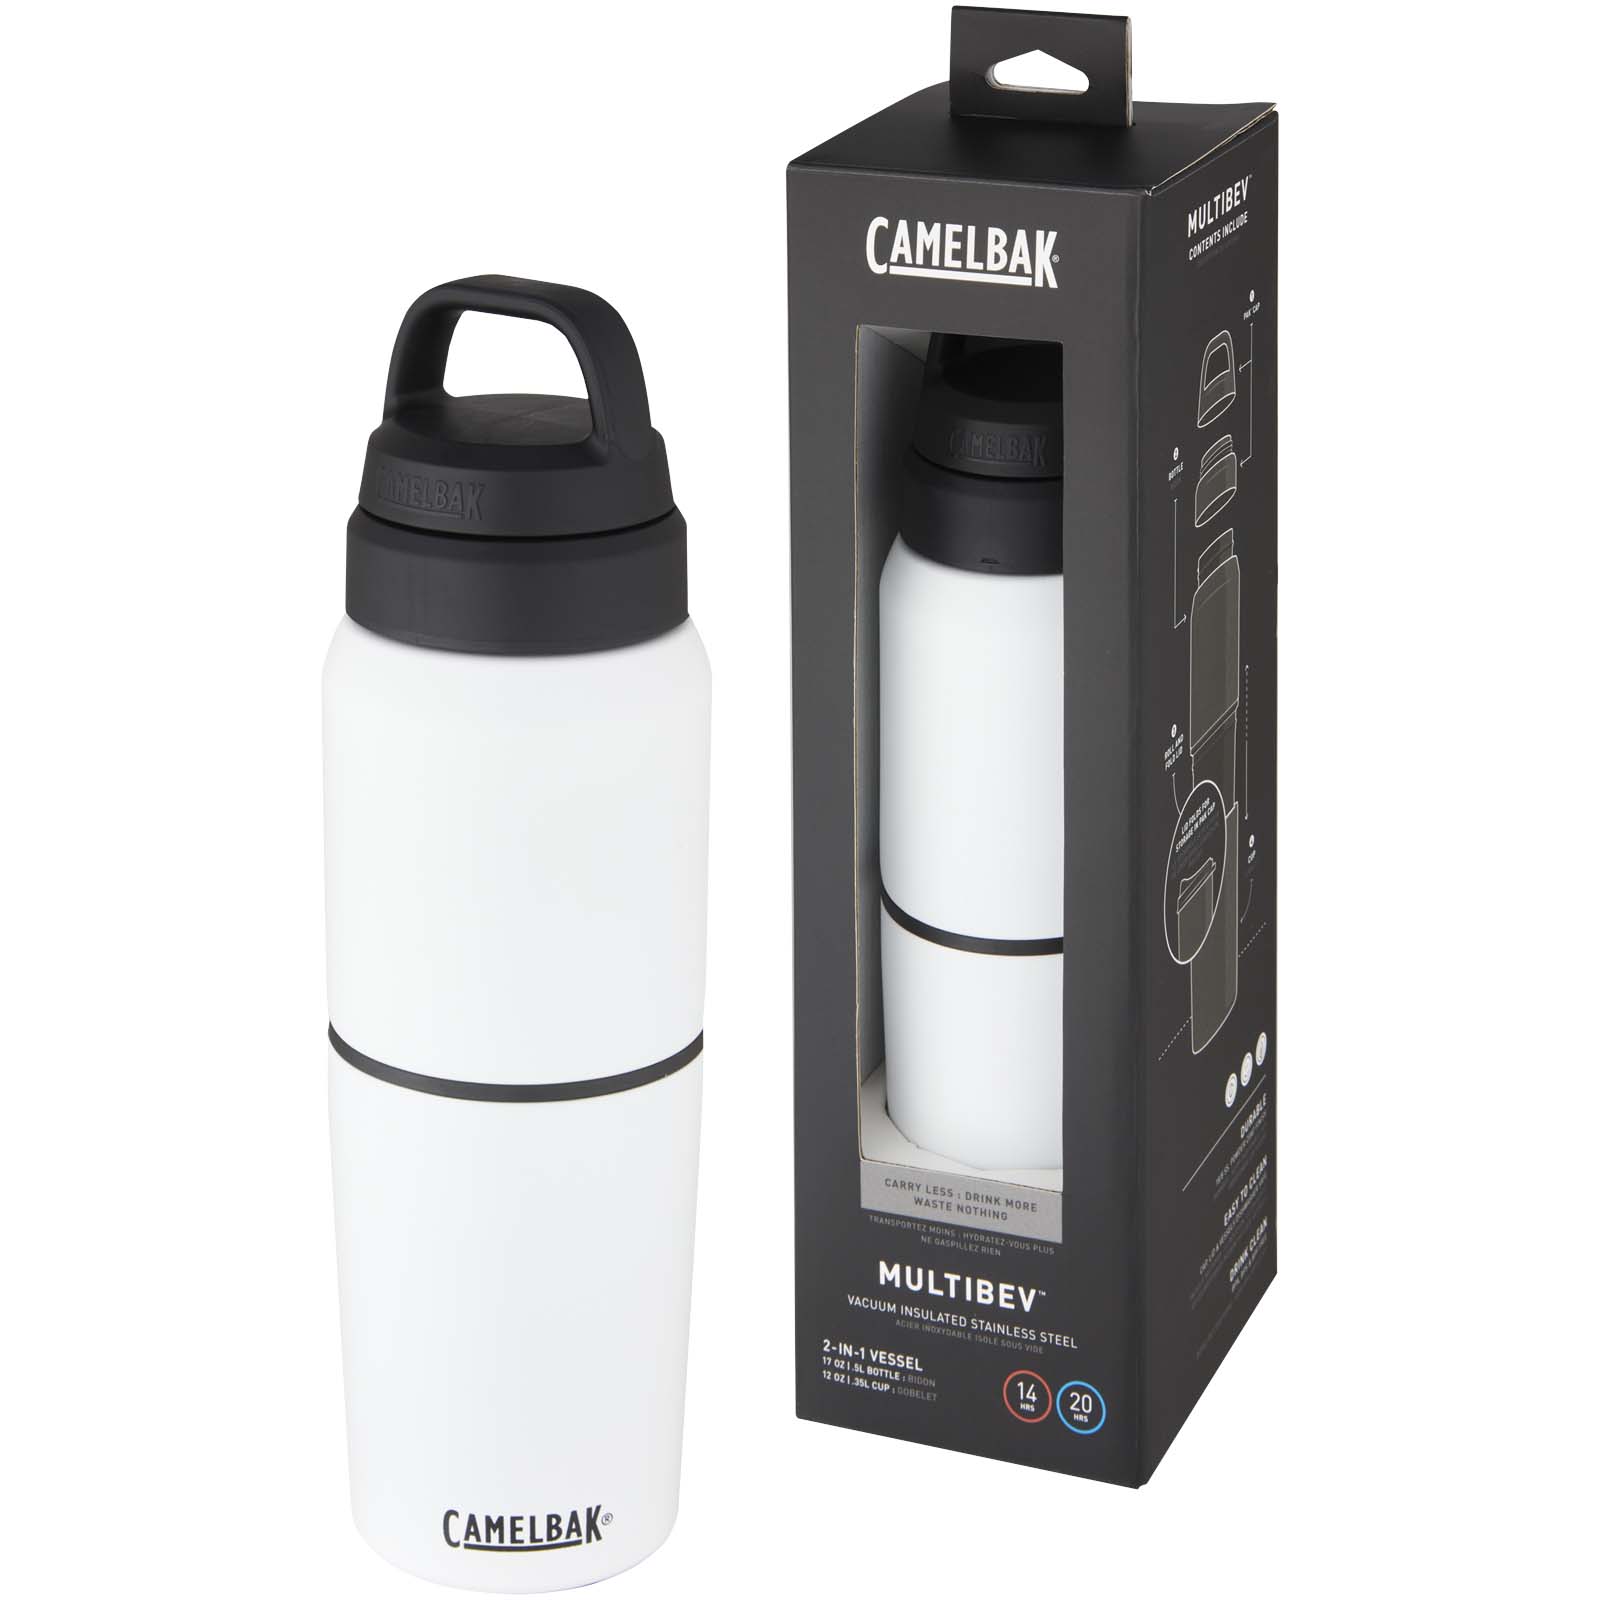 Advertising Water bottles - CamelBak® MultiBev vacuum insulated stainless steel 500 ml bottle and 350 ml cup - 3